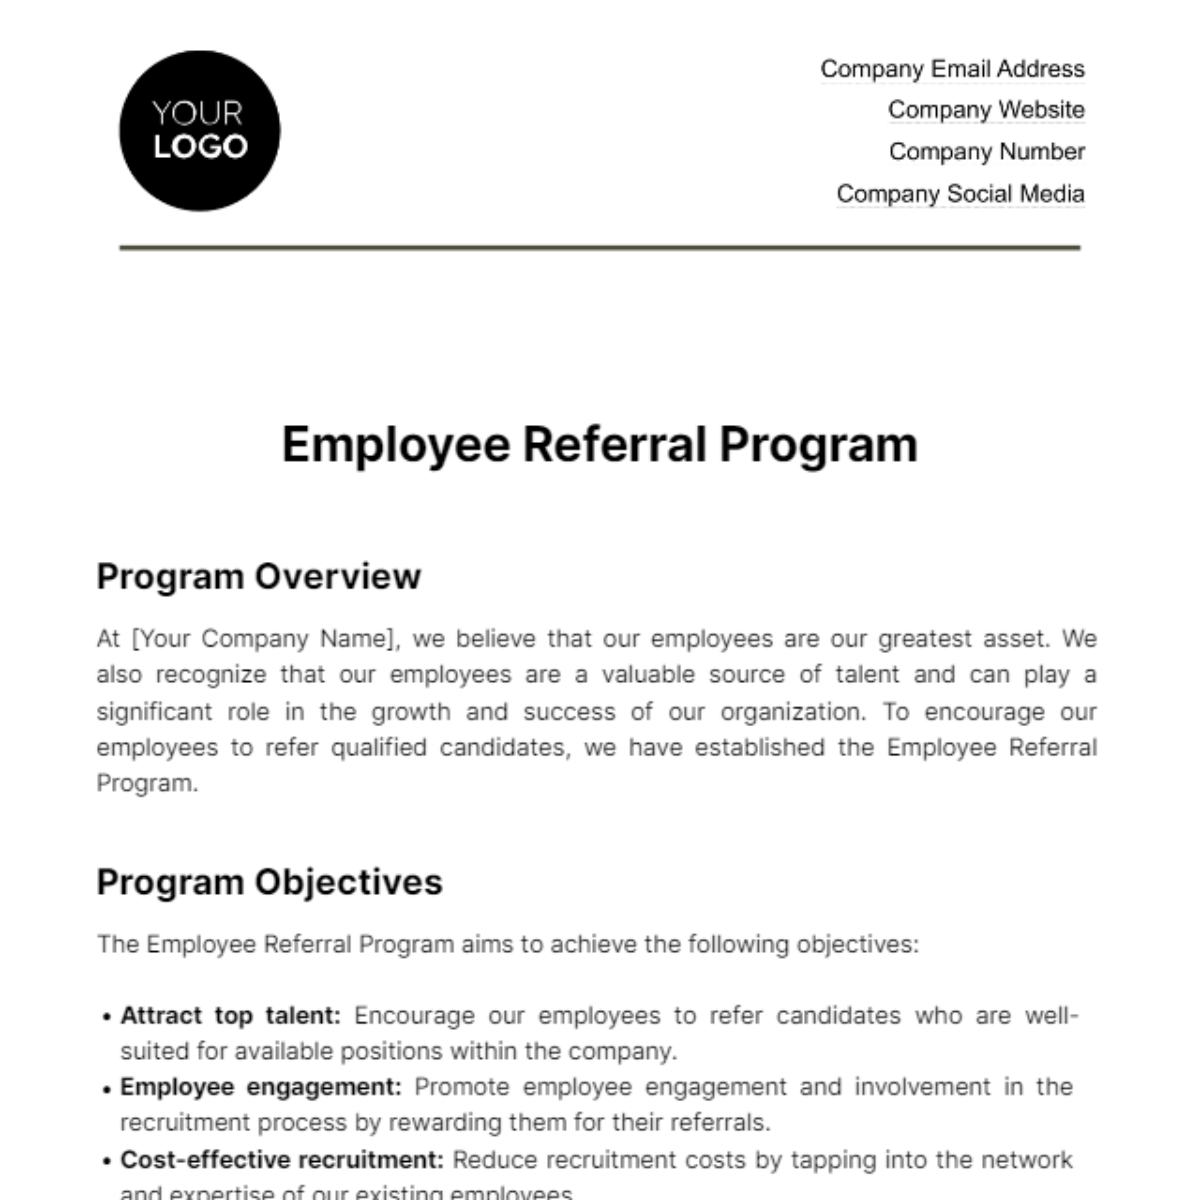 Employee Referral Program Document HR Template